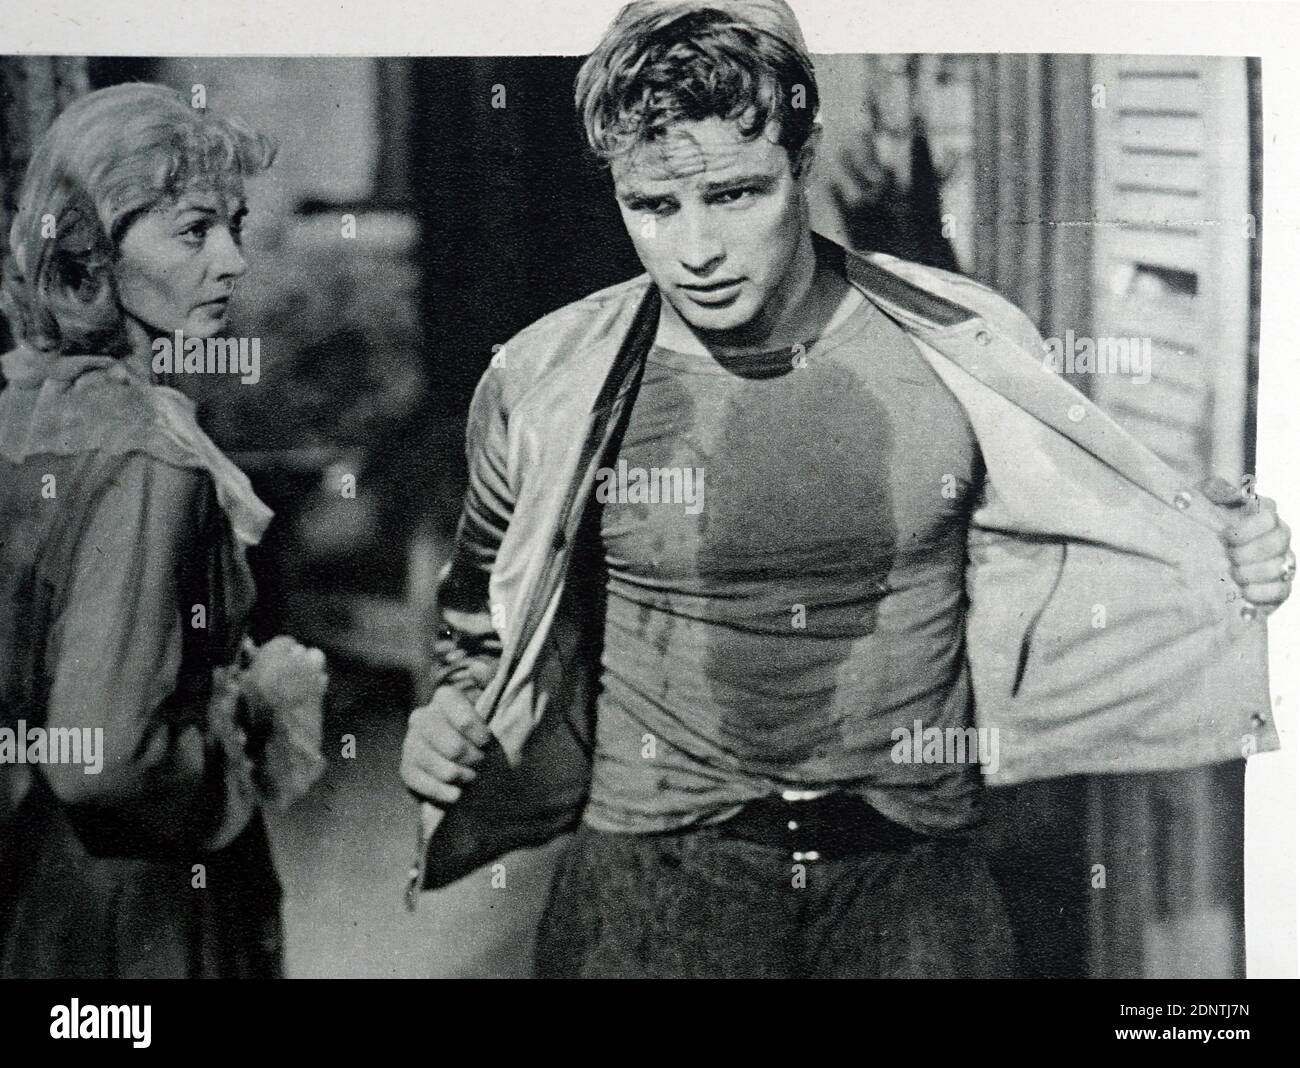 Film still from 'A Streetcar Named Desire' starring Marlon Brando, Vivien Leigh, Kim Hunter, and Karl Malden. Stock Photo